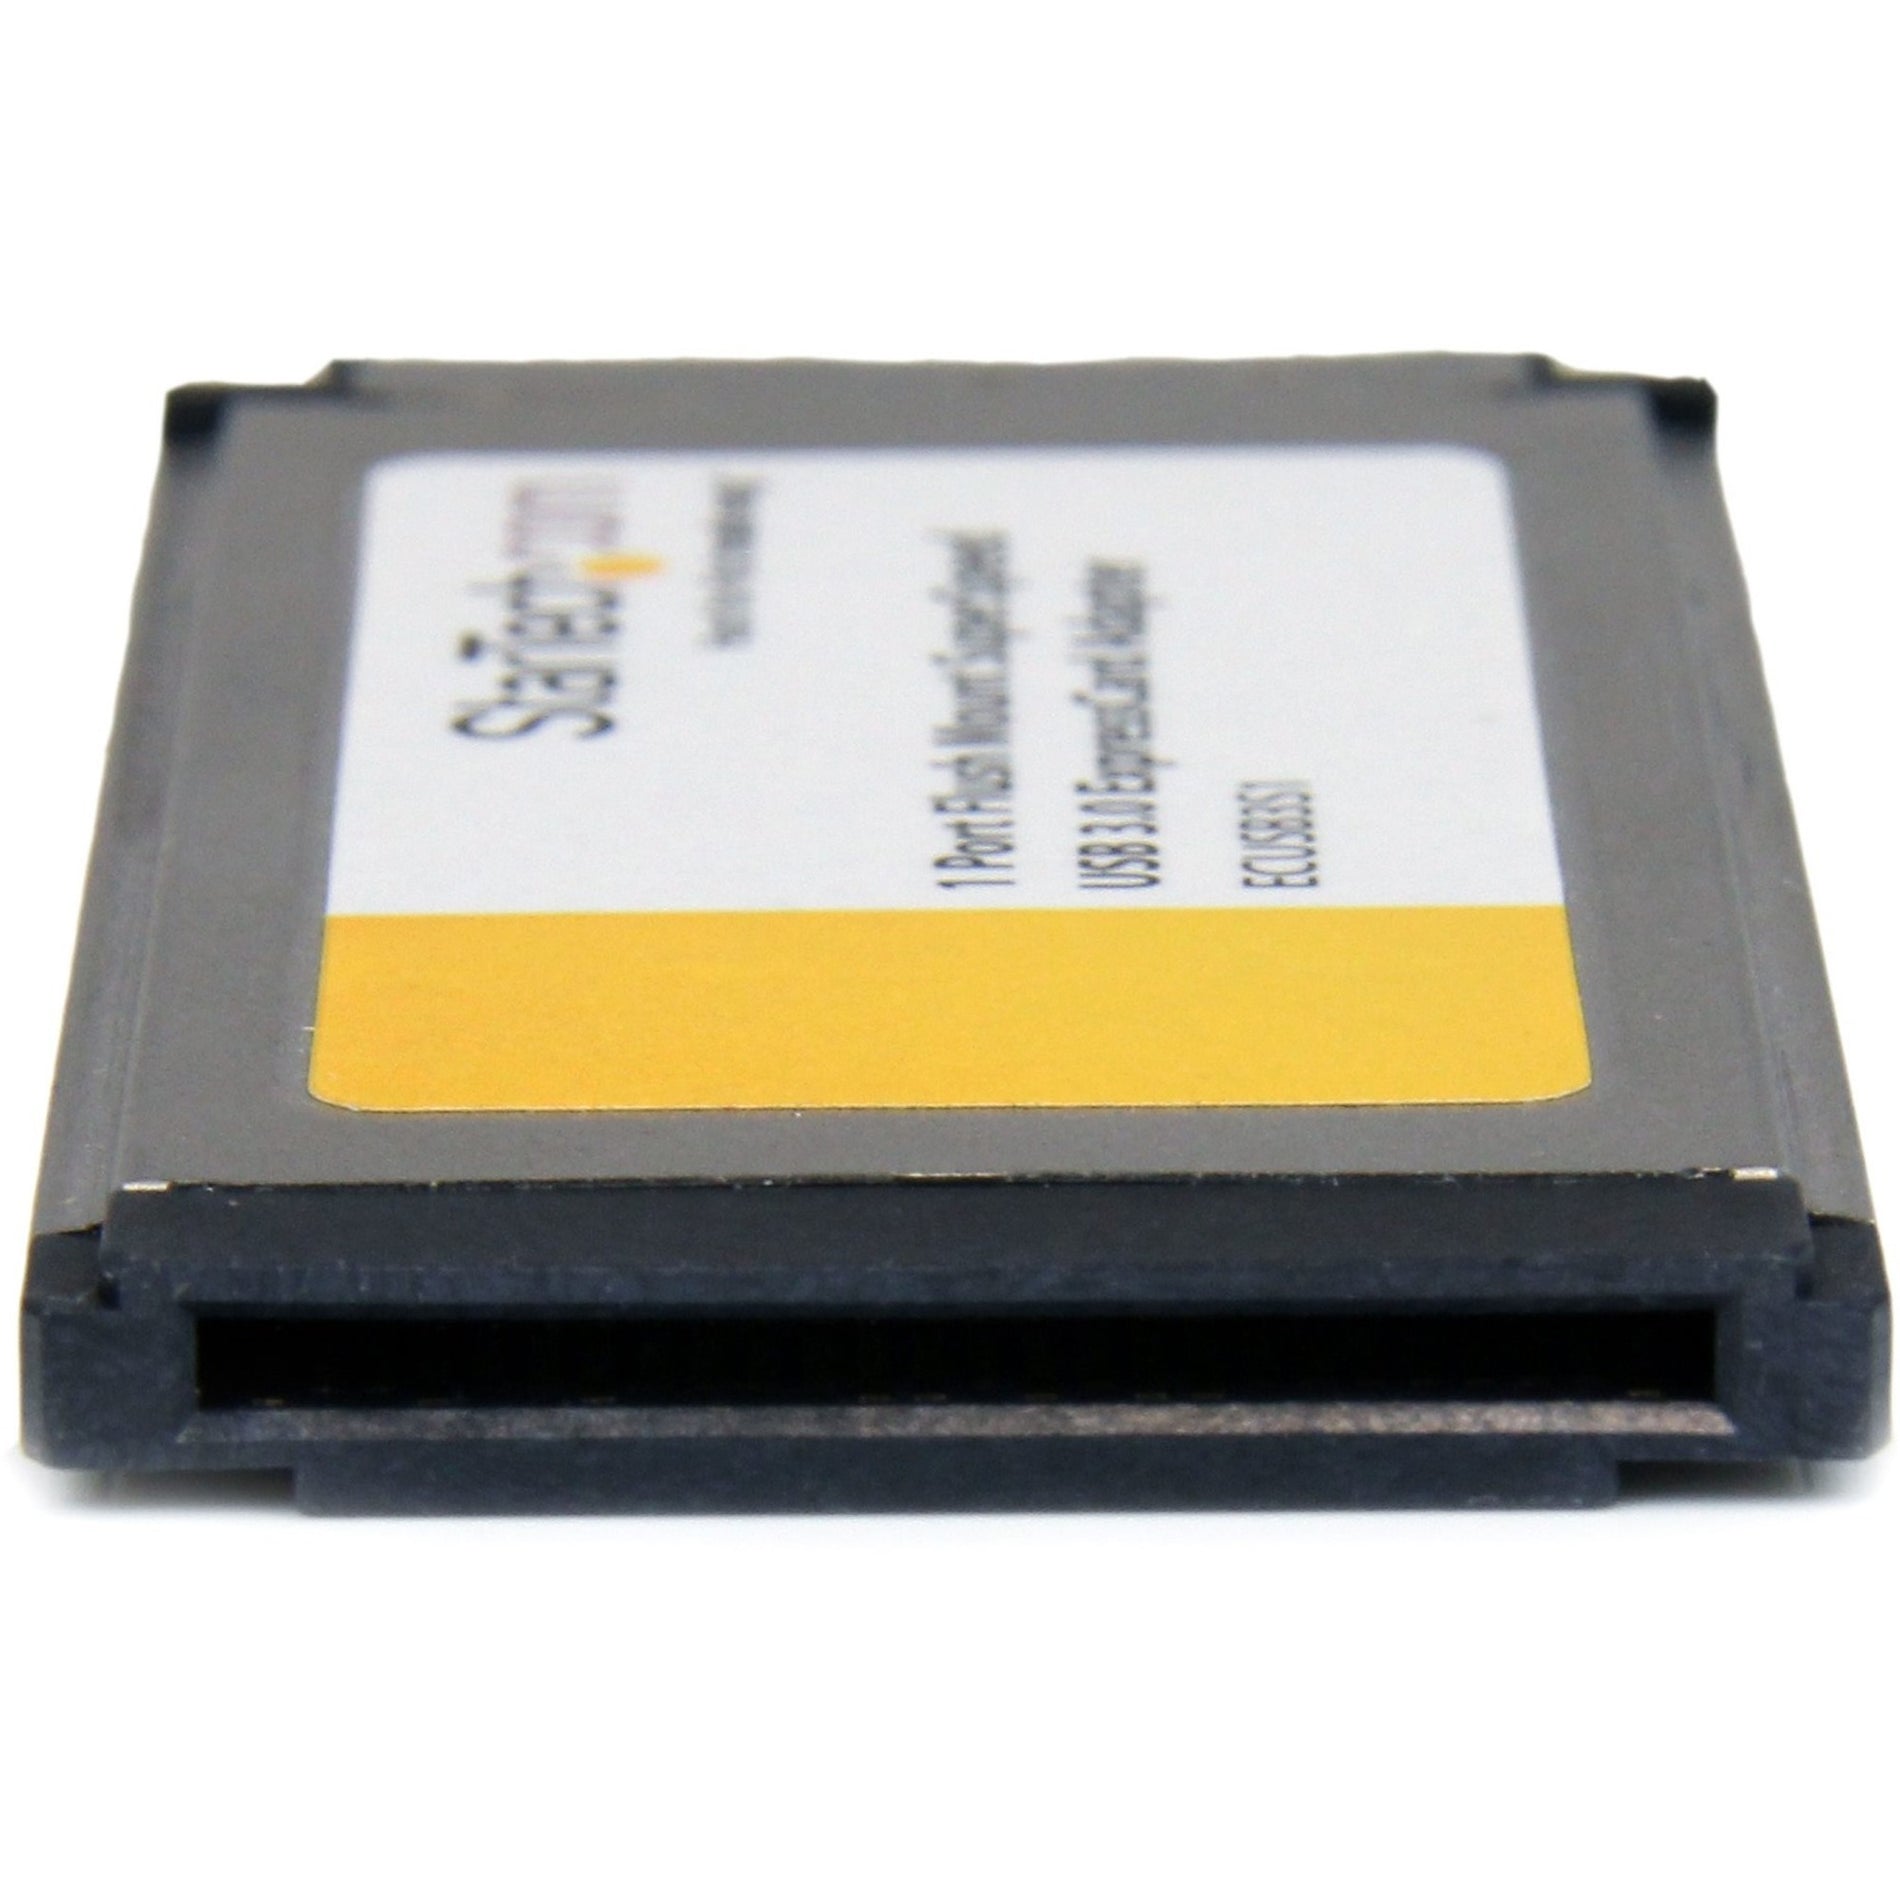 StarTech.com ECUSB3S11 1 Port Flush Mount ExpressCard SuperSpeed USB 3.0 Card Adapter, Plug-in Module, Silver, Black